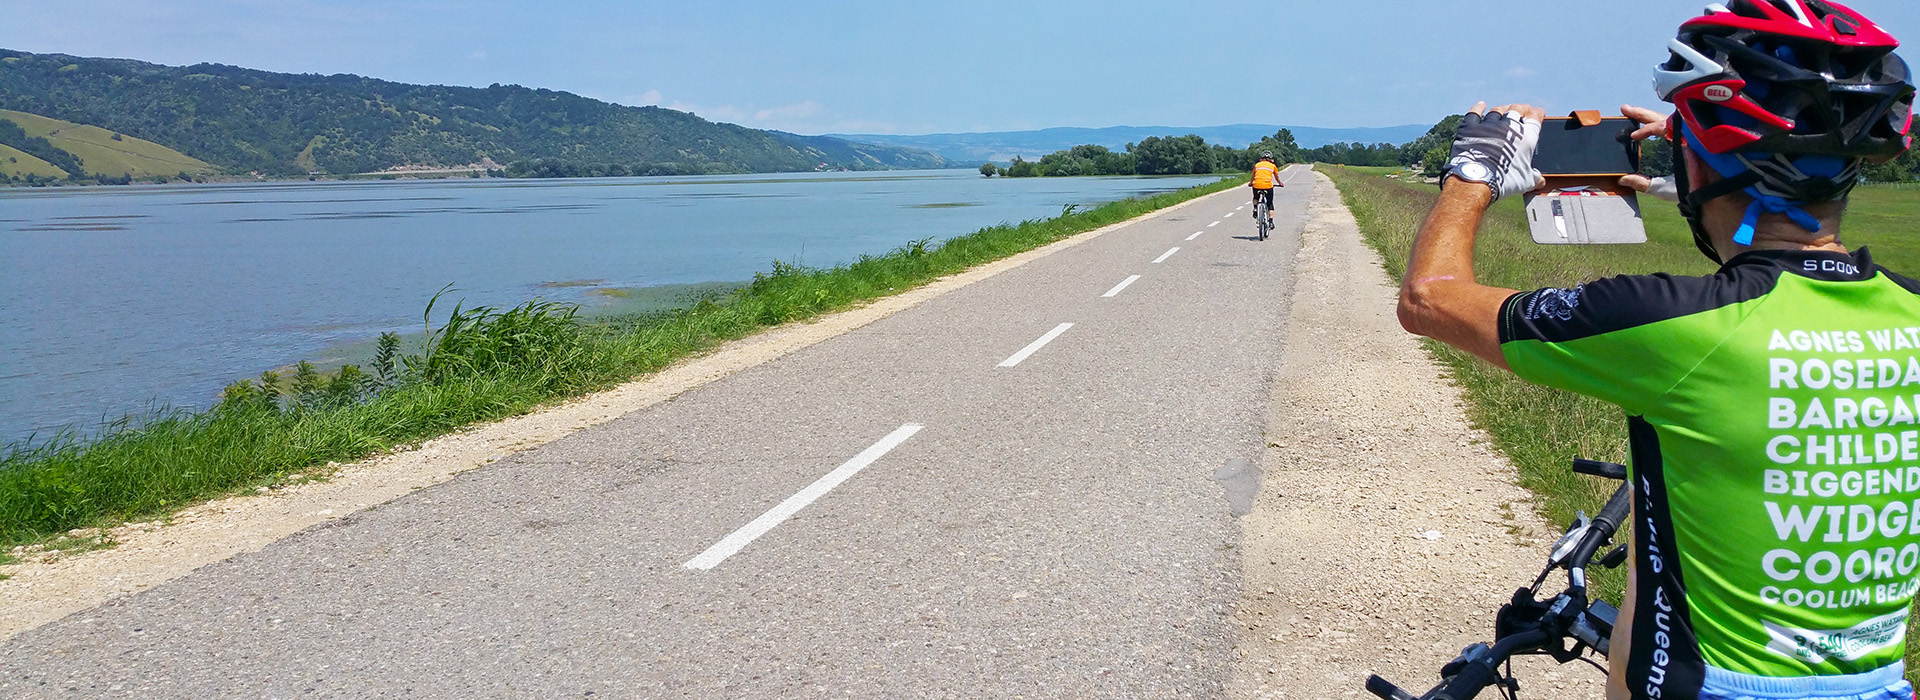 Danube Self-Guided Cycling Holiday - Danube river